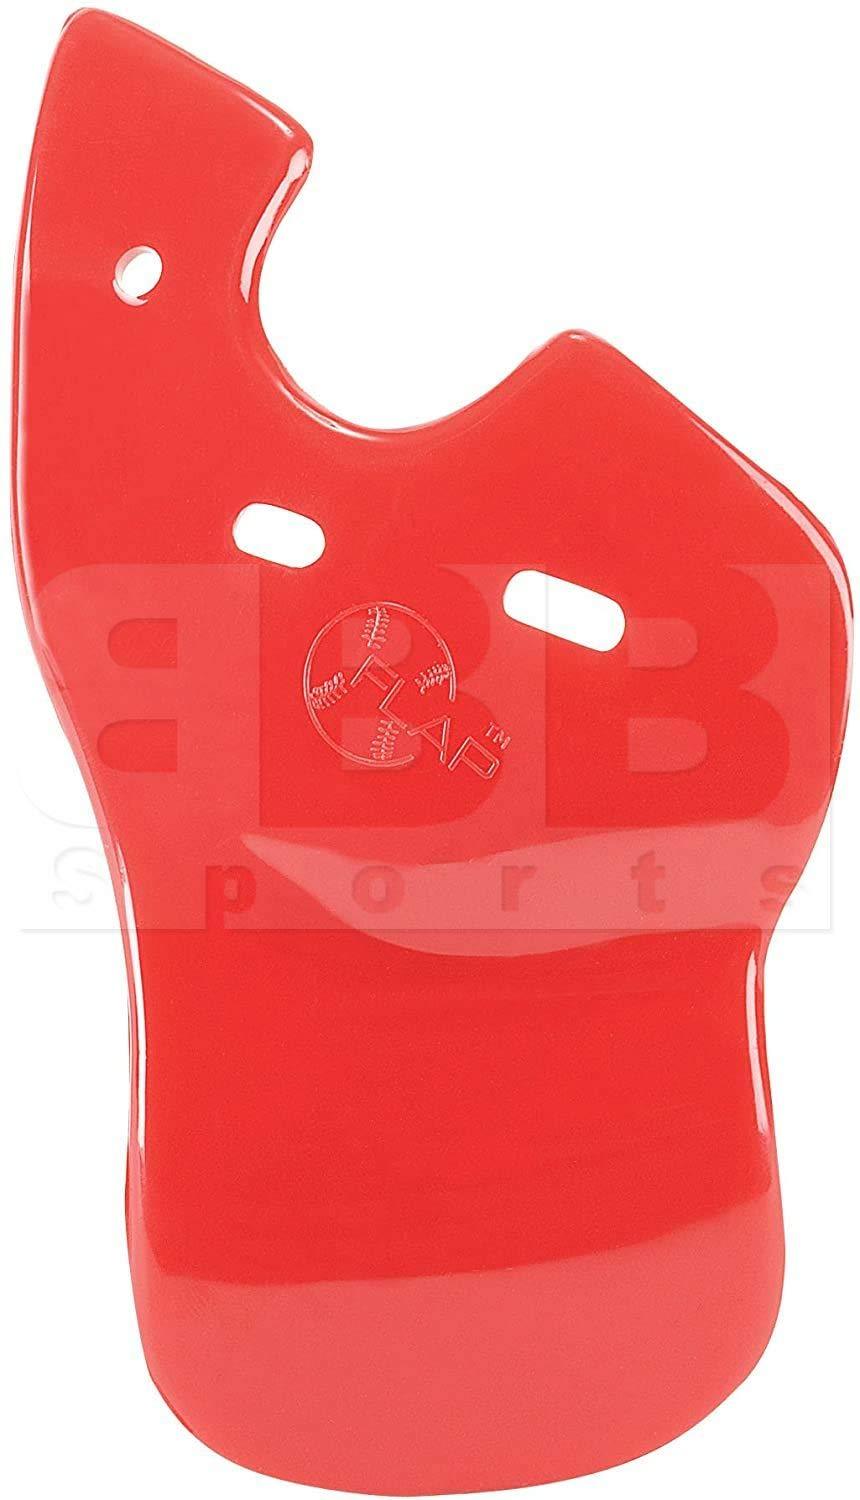 [AUSTRALIA] - Authentic Baseball Shop Red Right C-Flap (Left Handed Hitter) Batter's Helmet Face Protector Attachment (Helmet Sold Separately) 